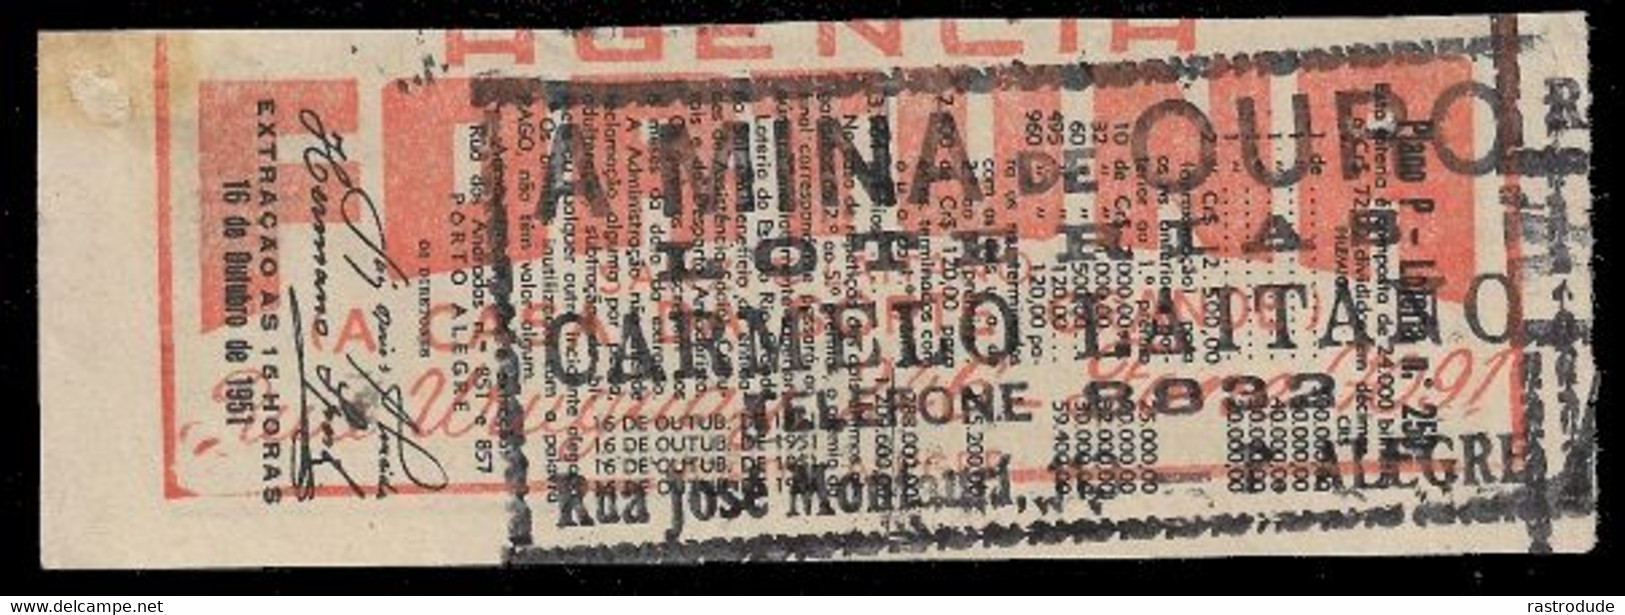 1951 BRAZIL BRASIL - LOTTERY TICKET BILHETE DE LOTERIA RIO GRANDE DO SUL - Lottery Tickets